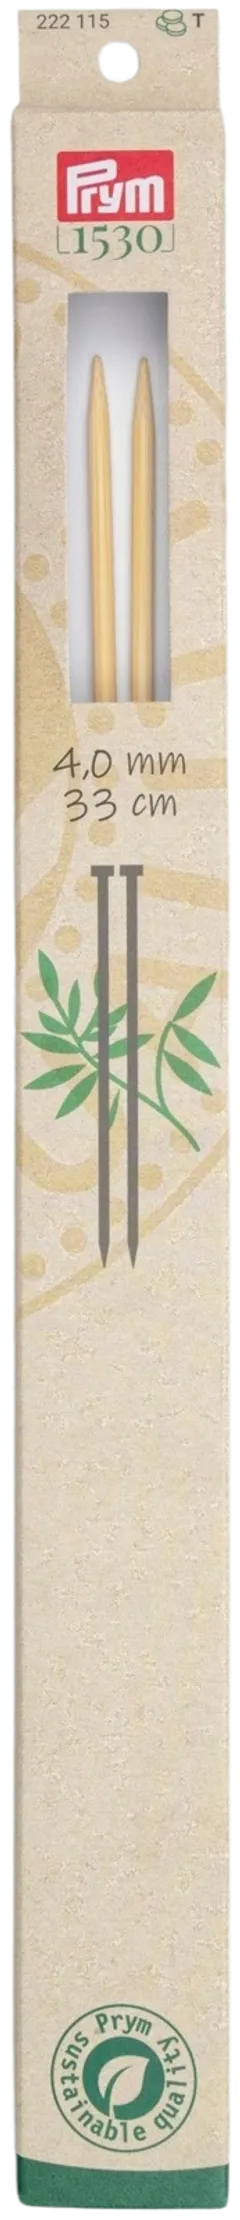 Prym neulepuikko 4,0 33cm bambua - 1